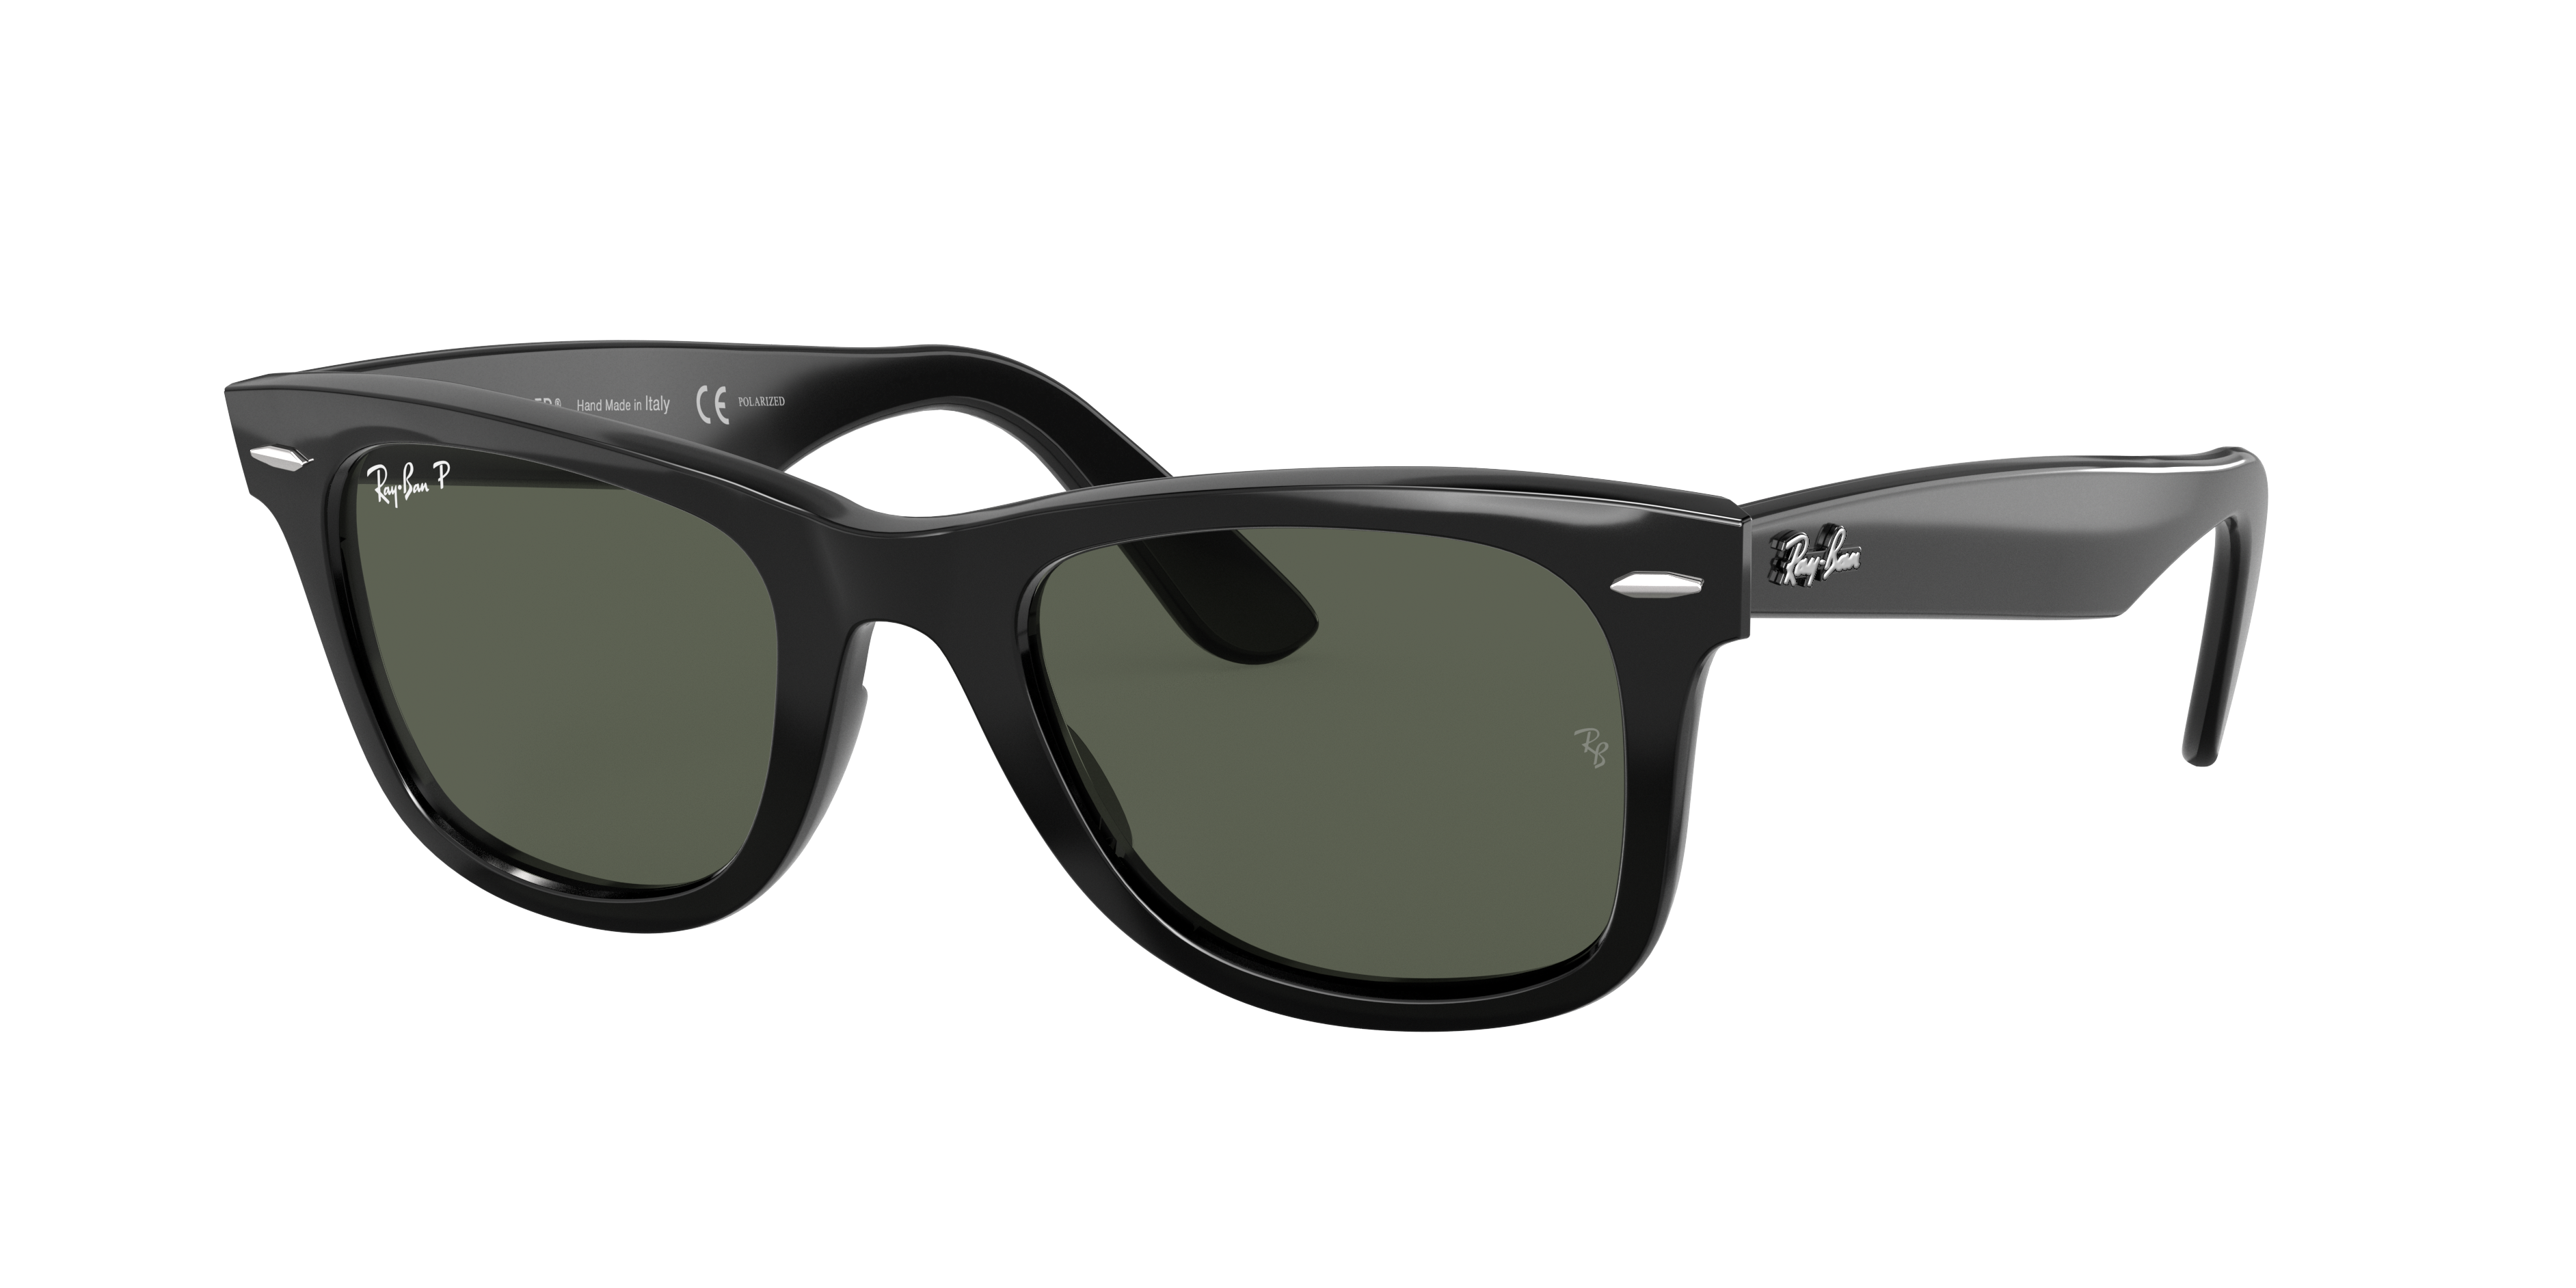 Alabama Black Plastic Frame Classic Sunglasses with Logo 